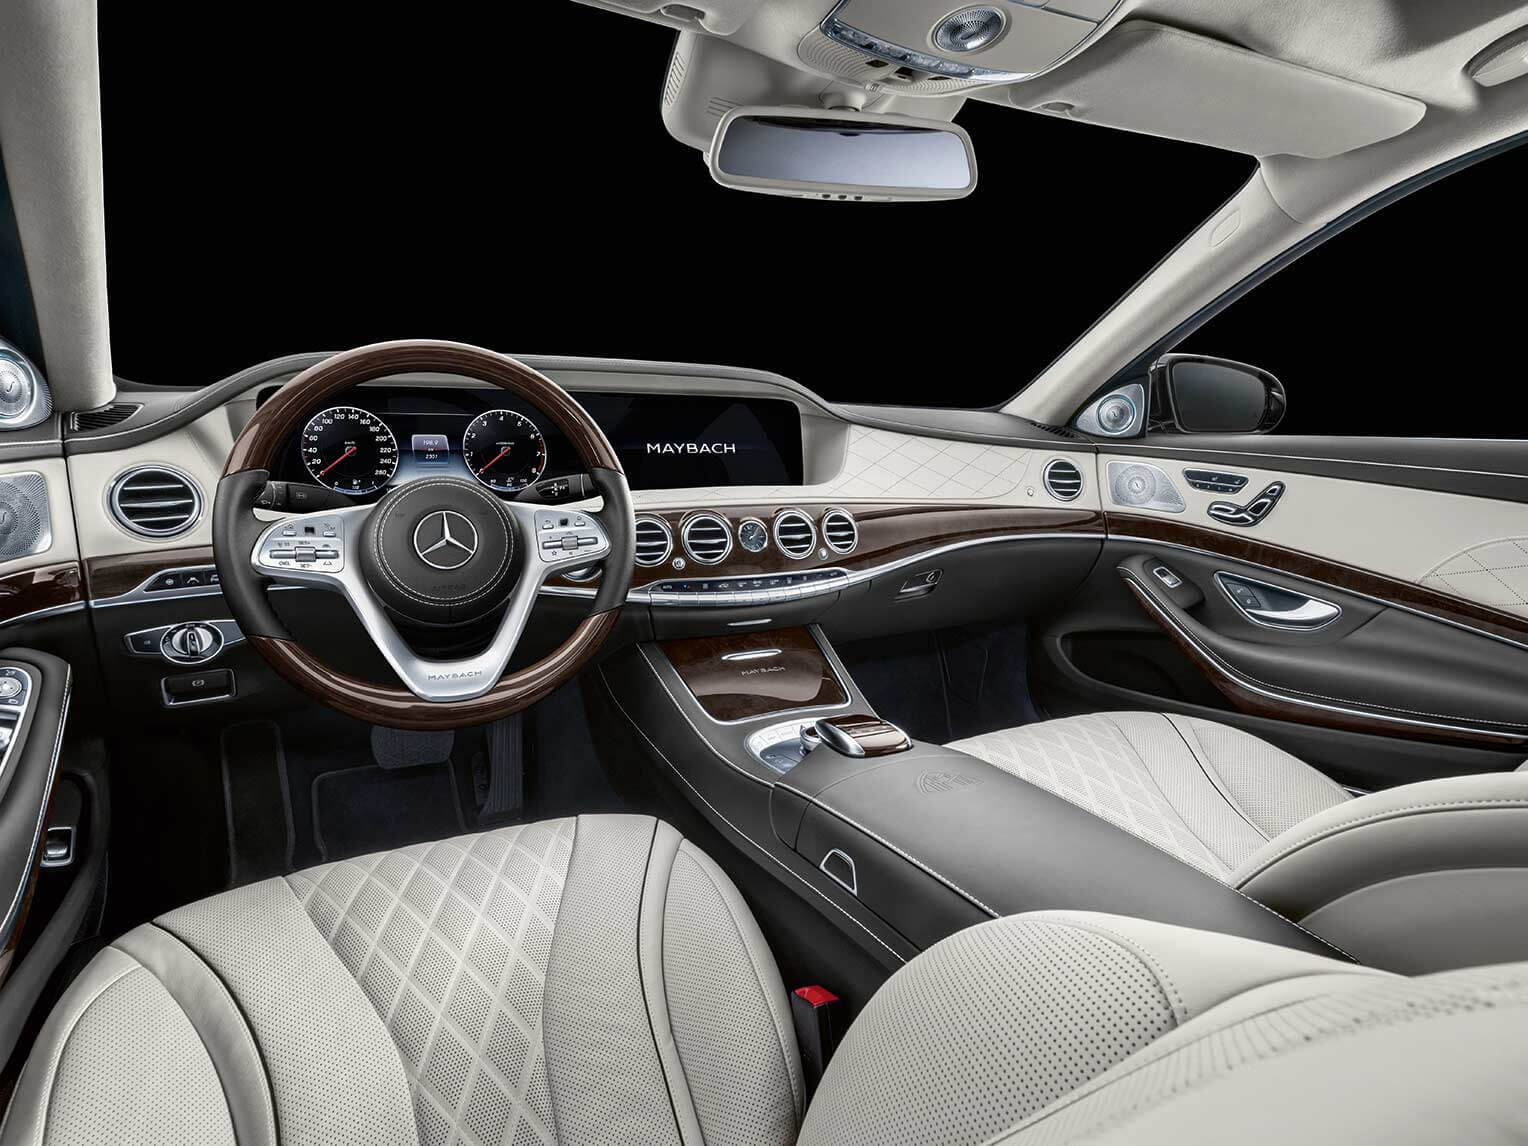 Mercedes-Maybach interior